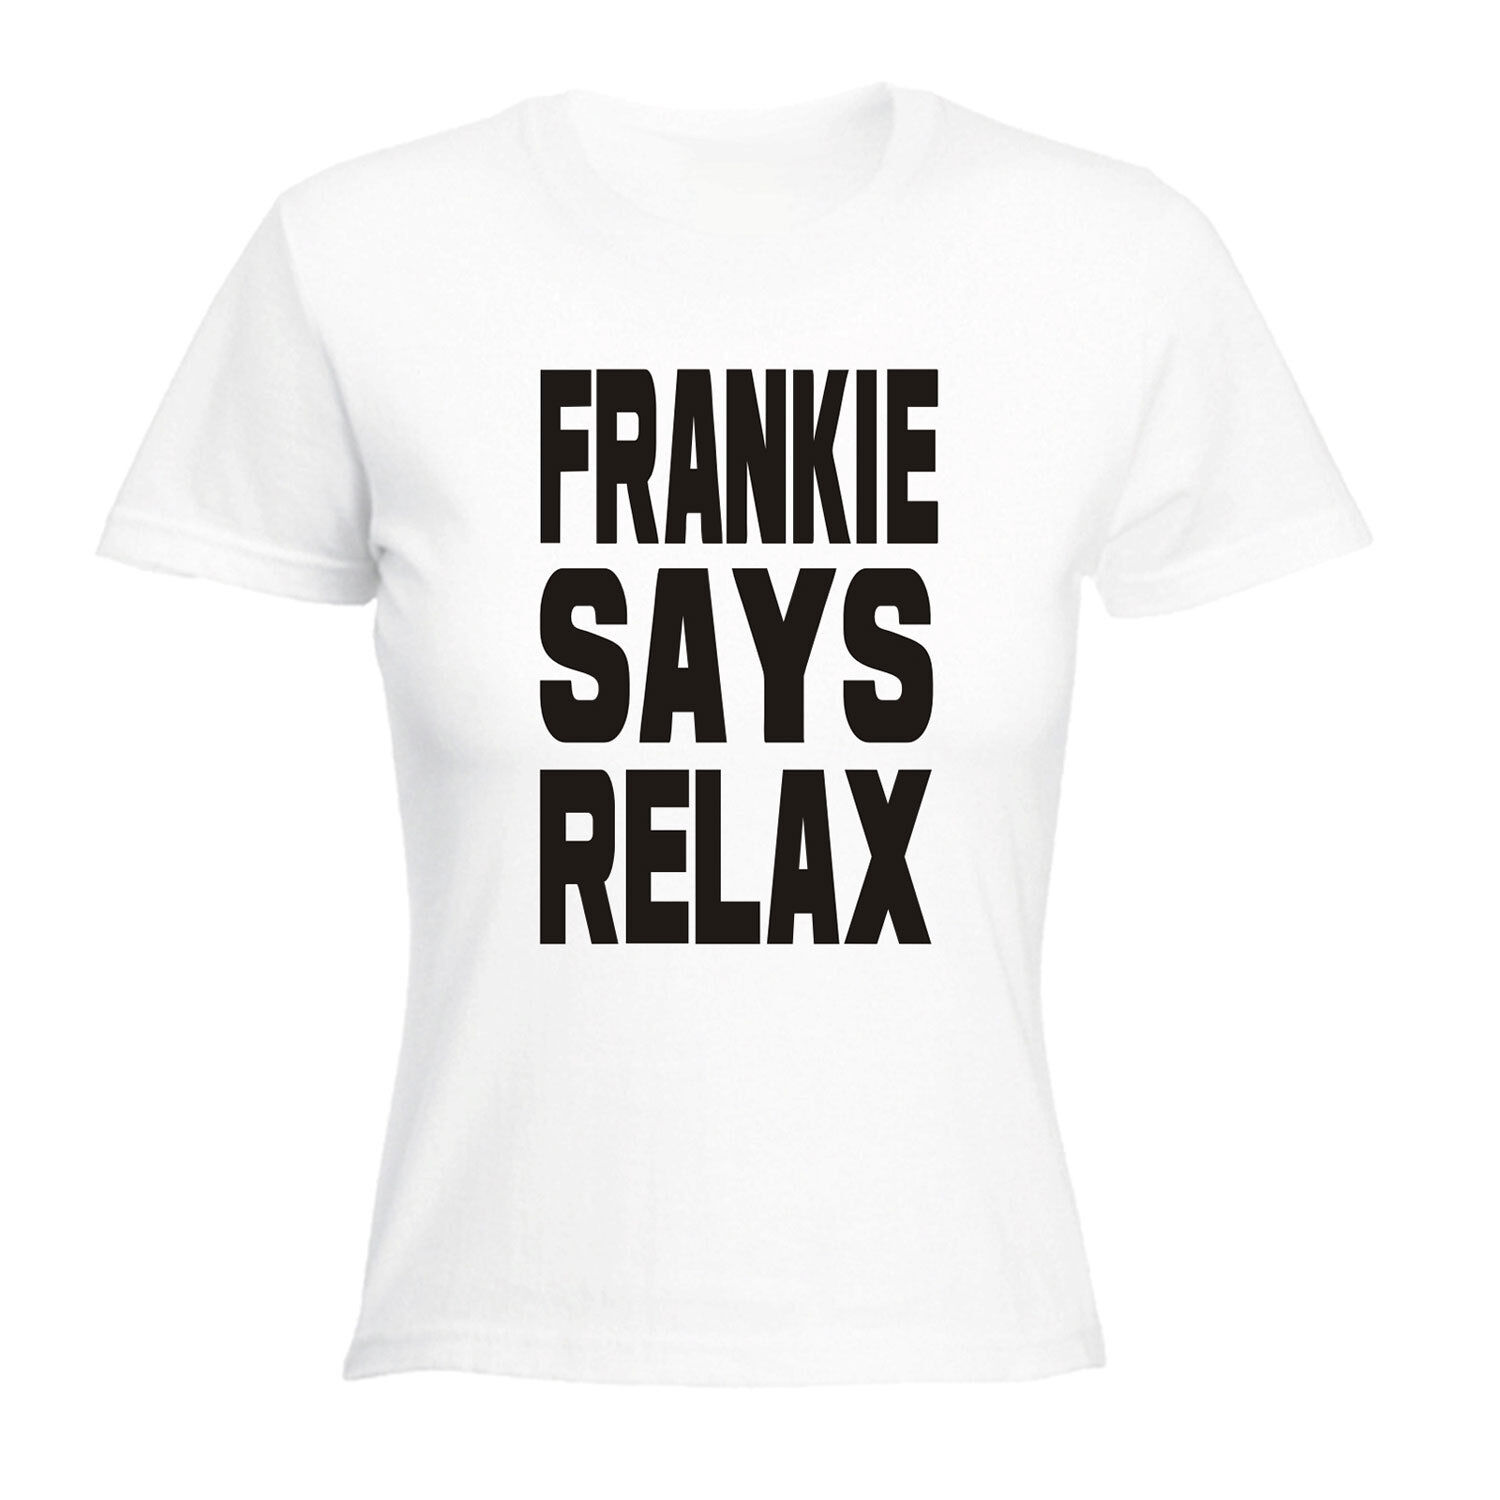 Men's Cotton Shirt Short Sleeve Casual Summer Beach T Shirts Frankie Says Relax WOMENS T-SHIRT 80 Fancy Dress 80S t shirt retro t-shirts tee